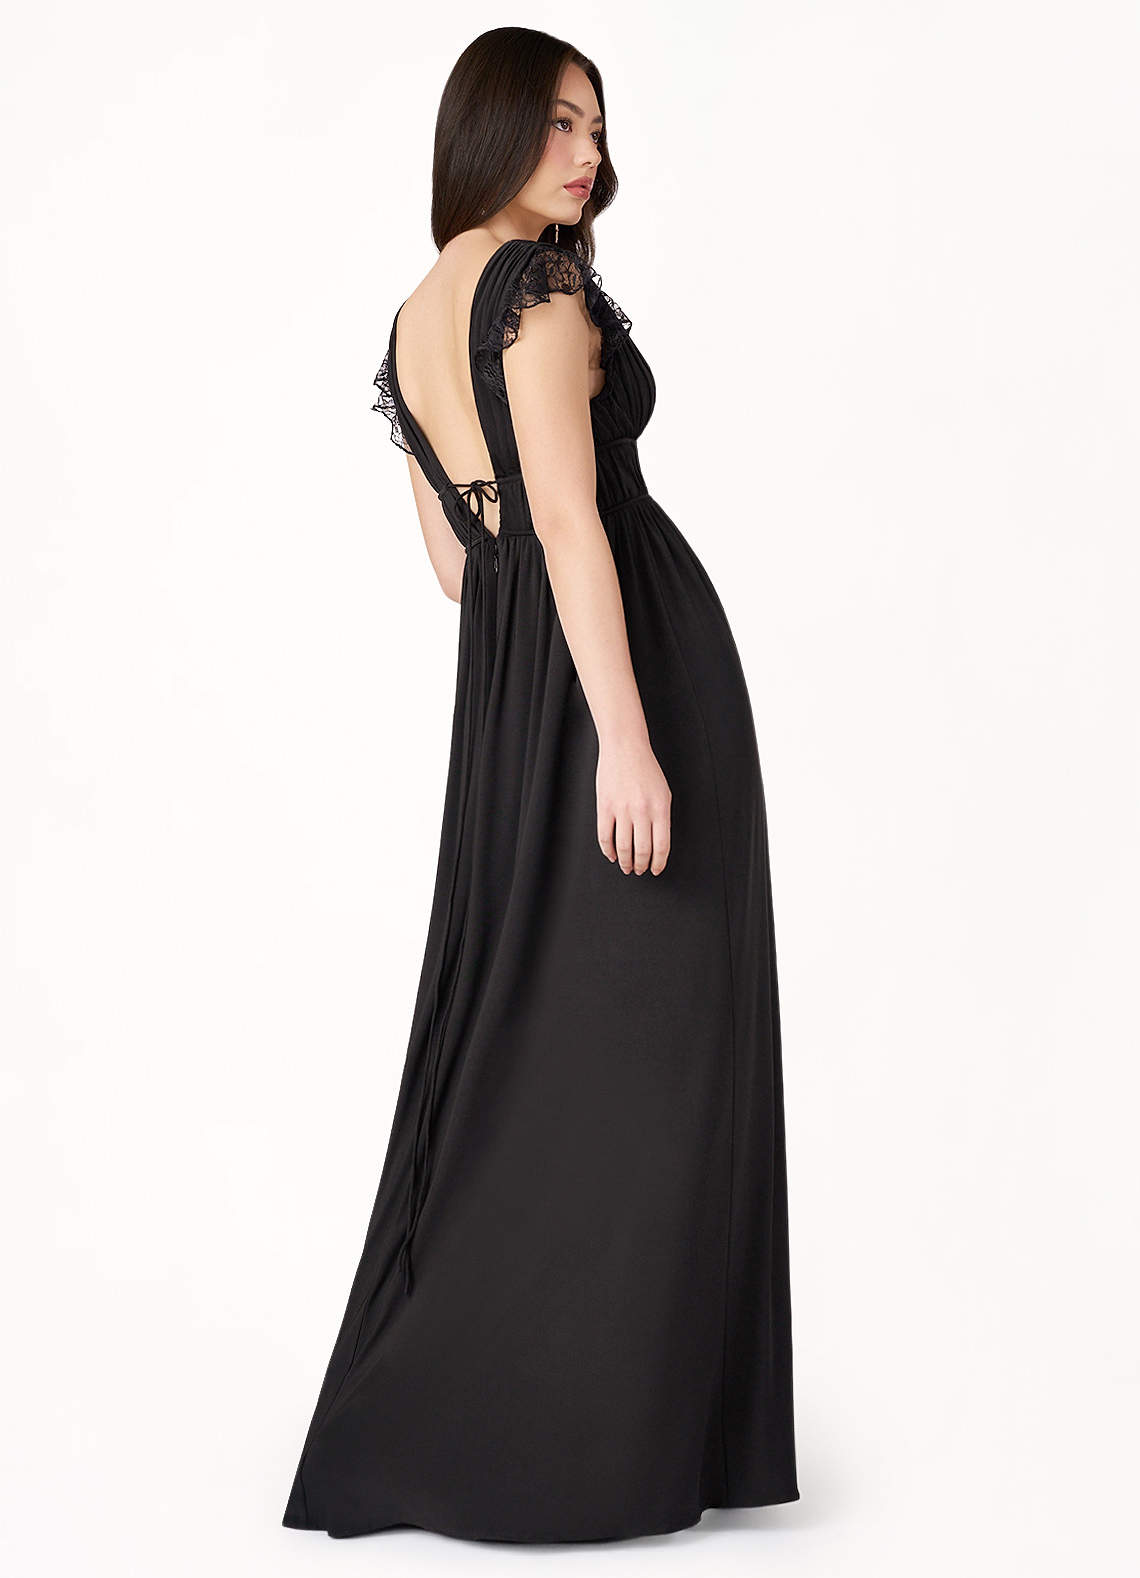 Lana Black Boho Maxi Dress image4